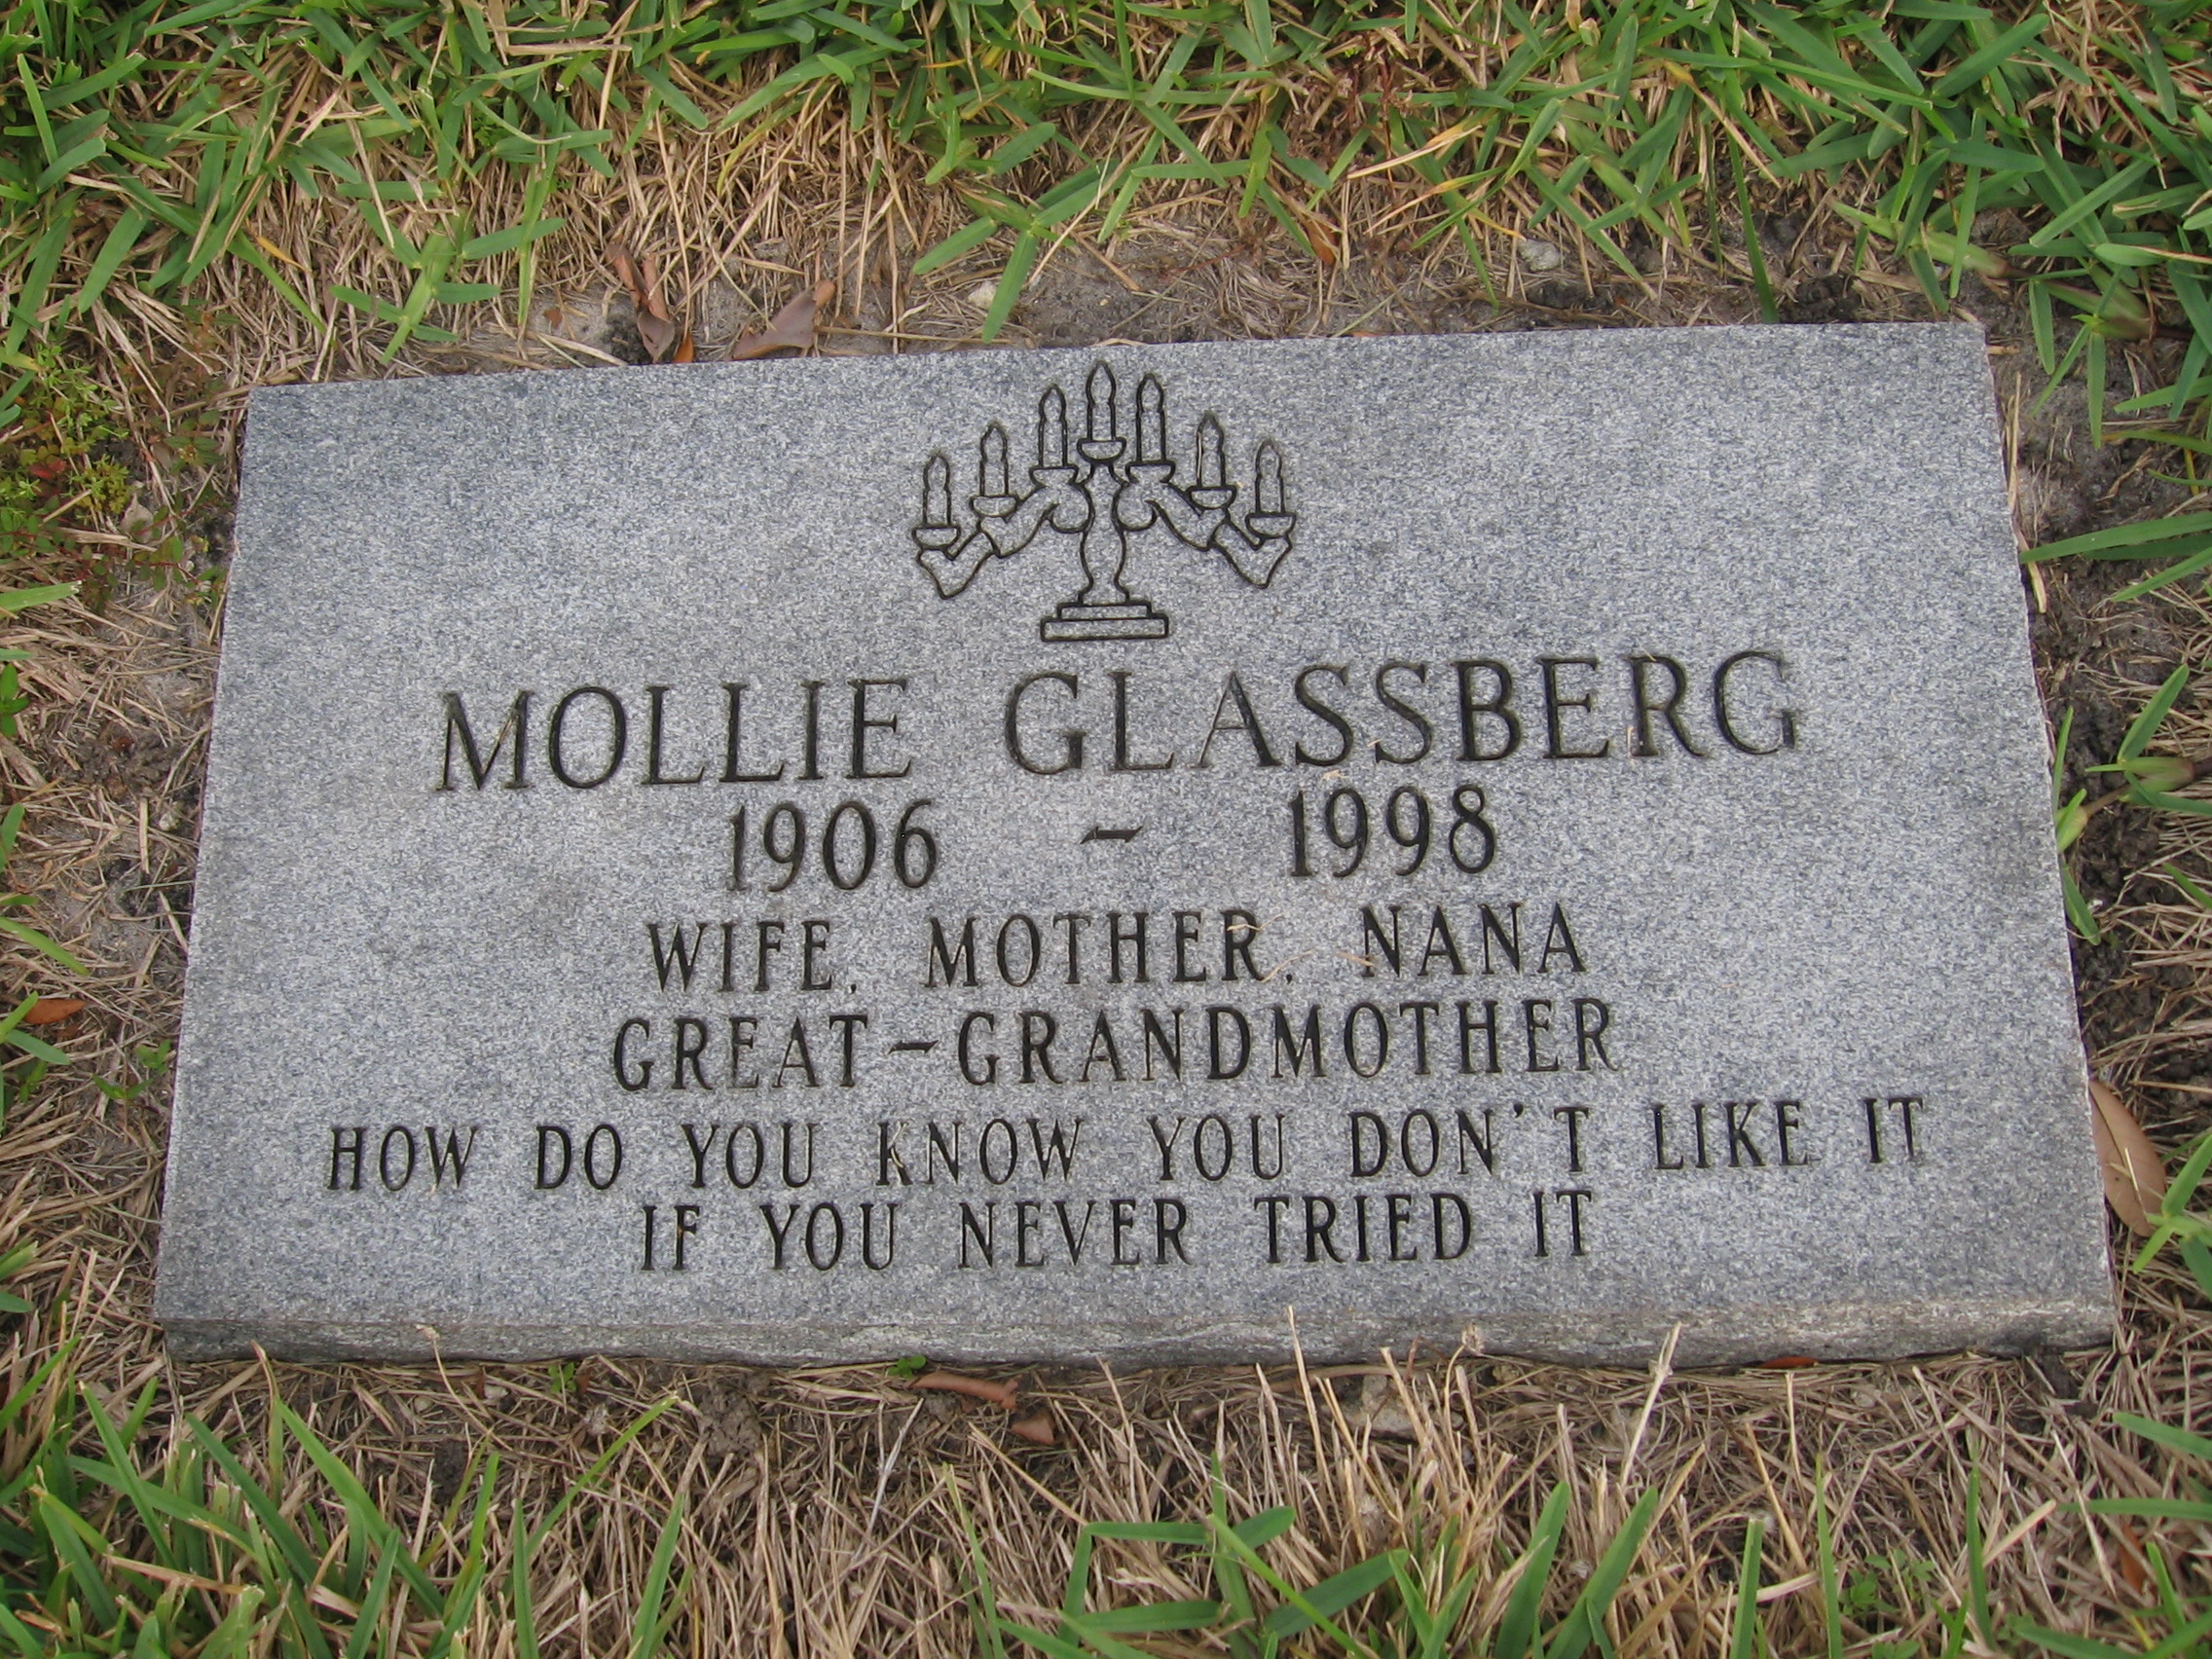 Mollie Glassberg